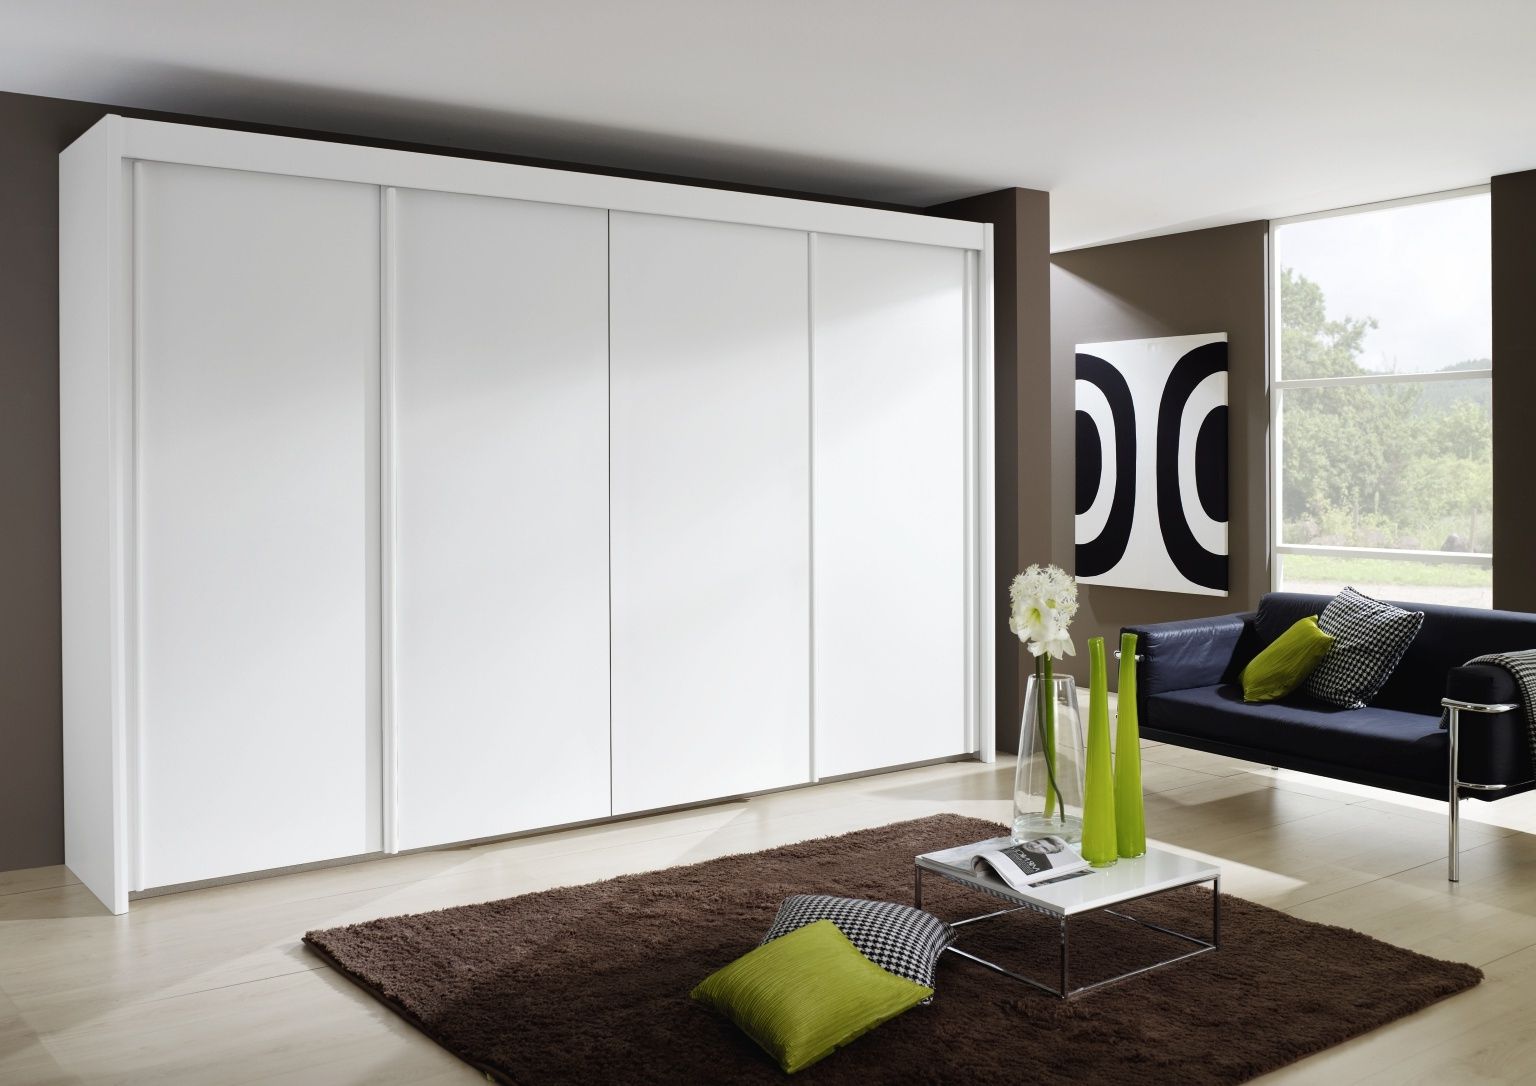 Rauch Imperial 4 Door Sliding Wardrobe In White – W 350cm – Cfs Furniture Uk In 4 Door White Wardrobes (Gallery 10 of 20)